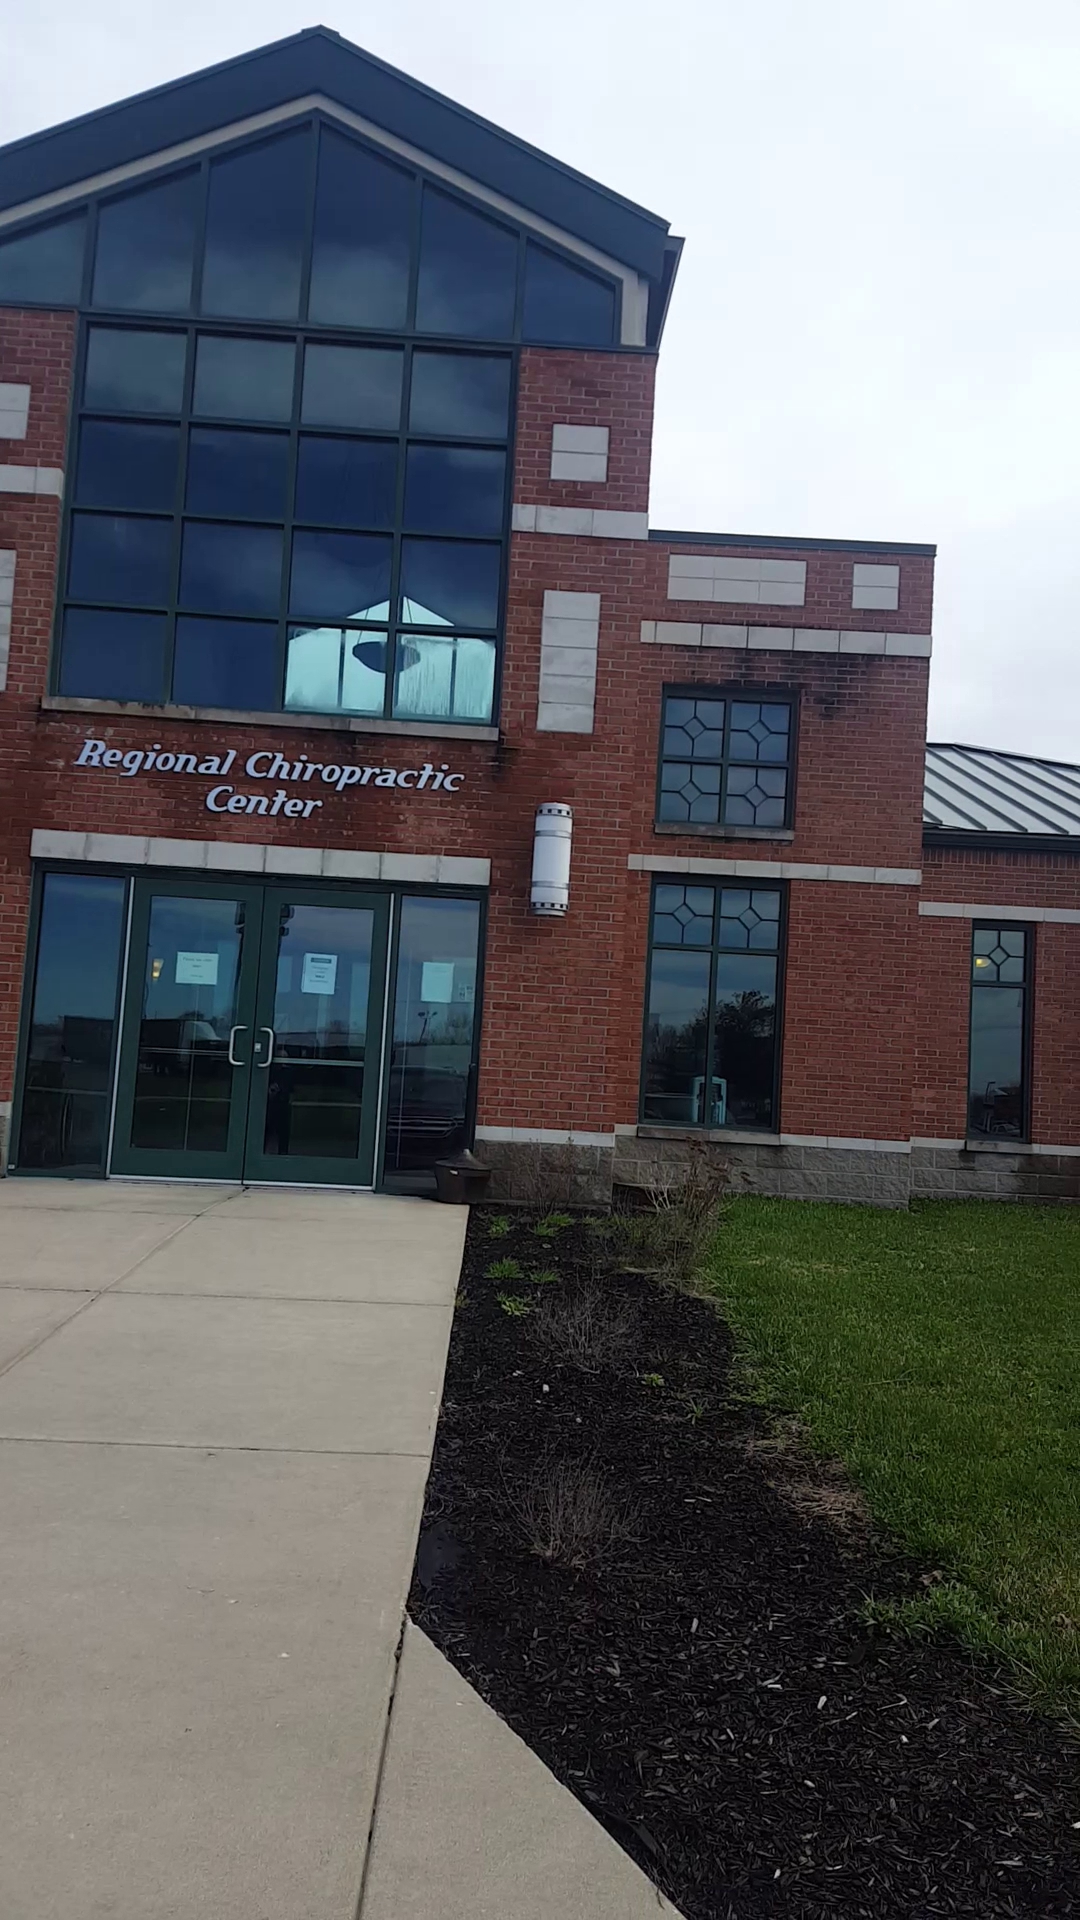 Regional Chiropractic Center